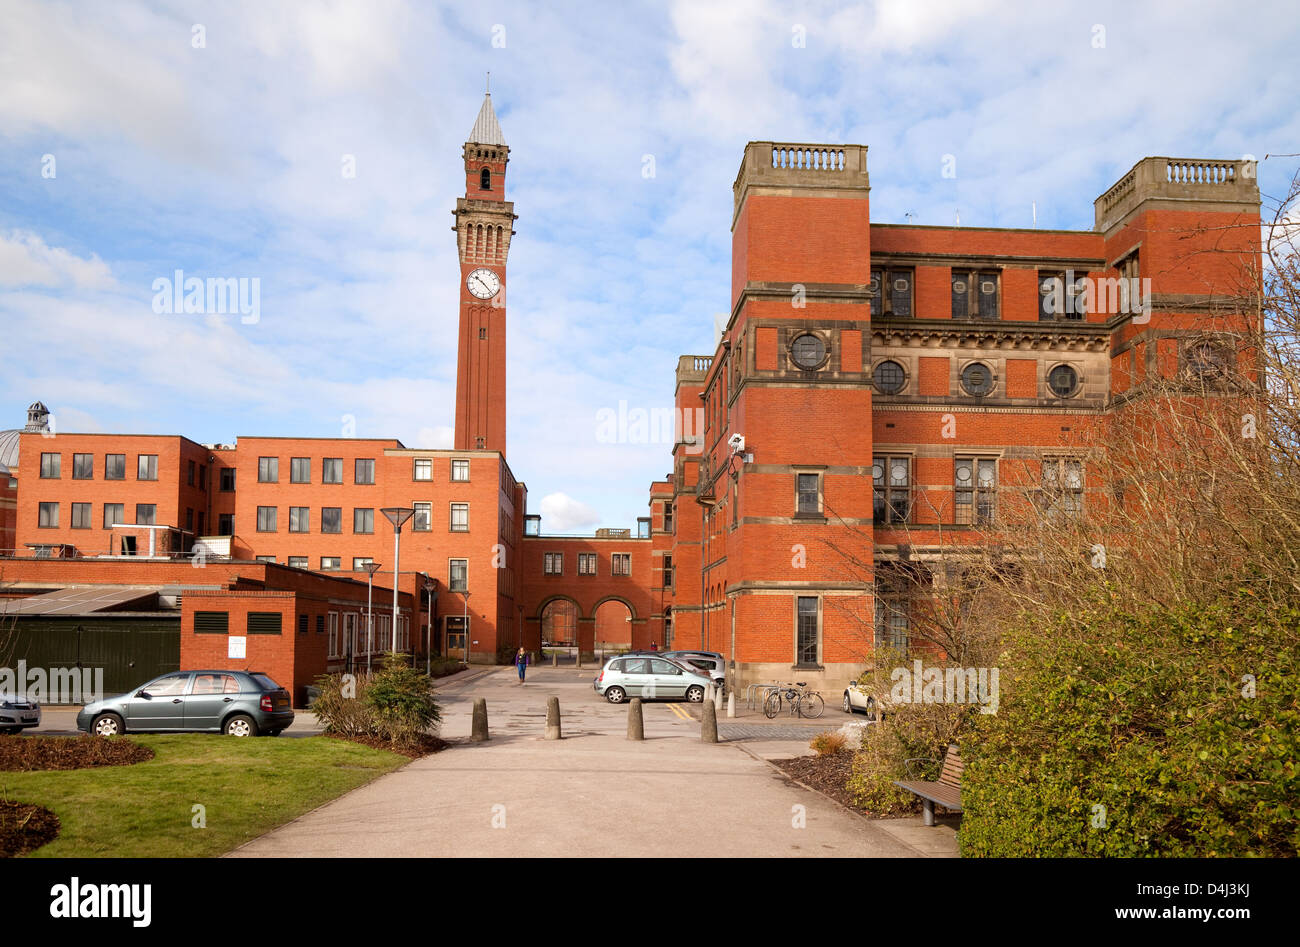 The red brick buildings and Clock tower of Edgbaston Campus, Birmingham University, UK Stock Photo